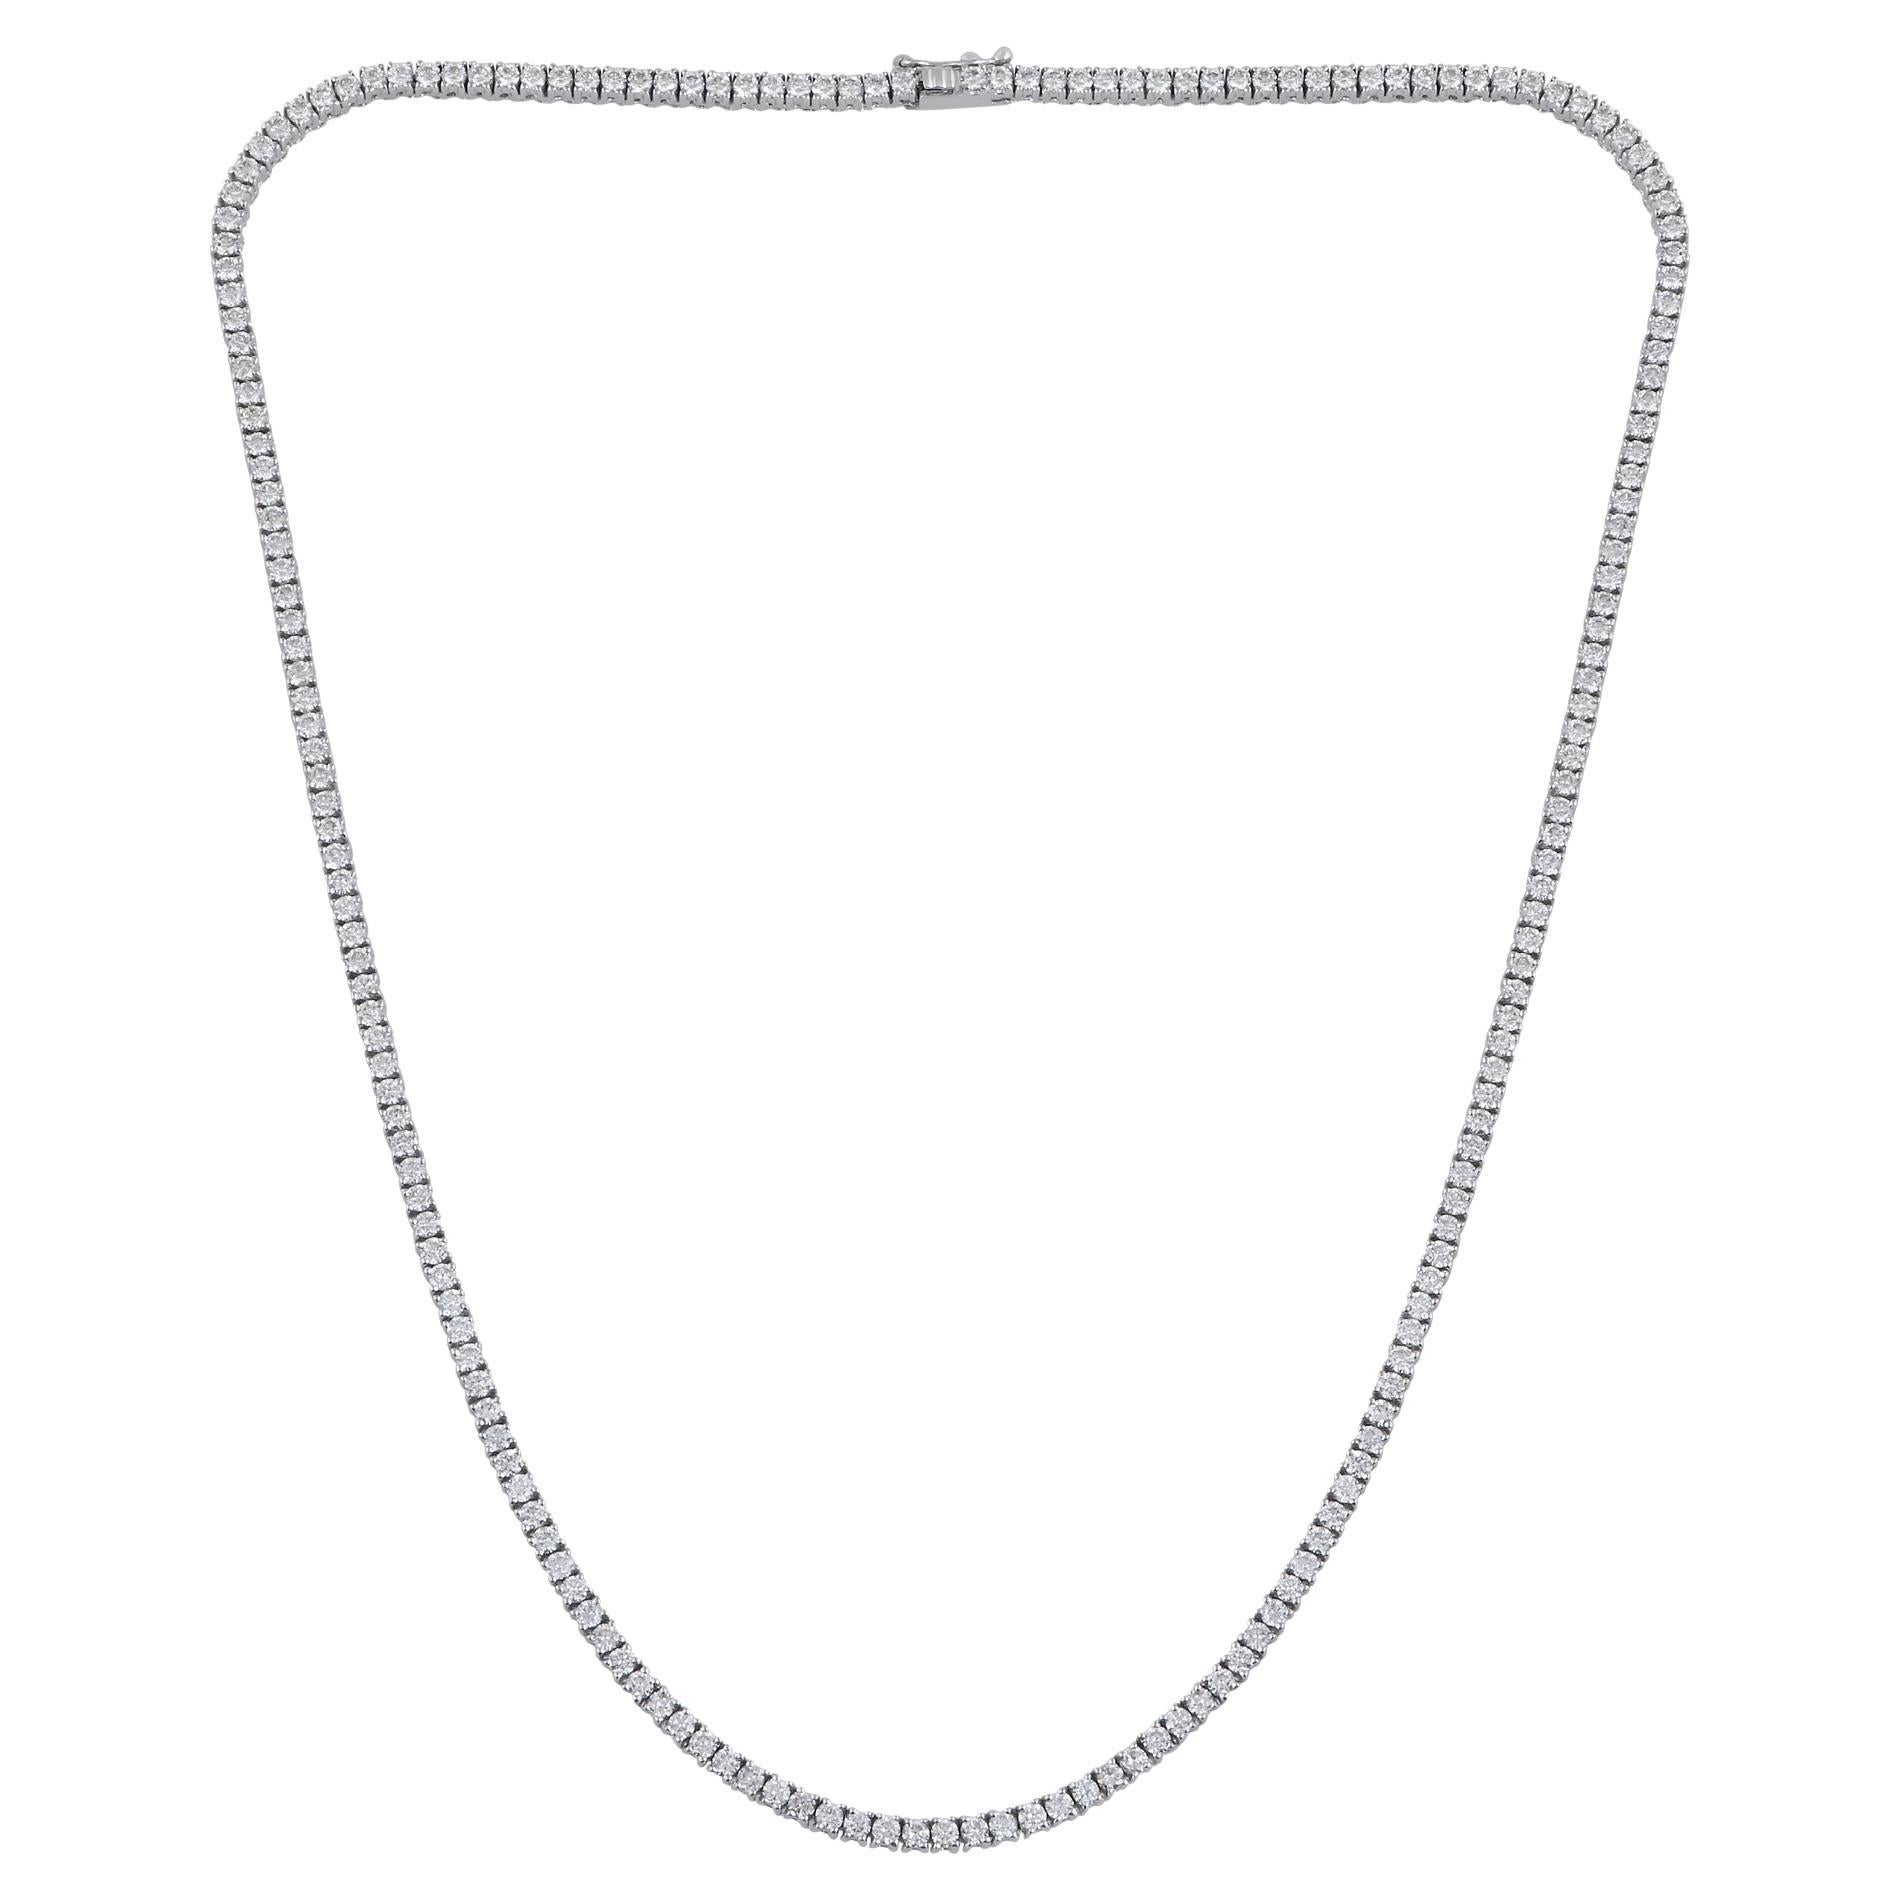 Natural 6.6 Carat Pave Diamond Tennis Chain Necklace 18 Karat White Gikd Jewelry For Sale